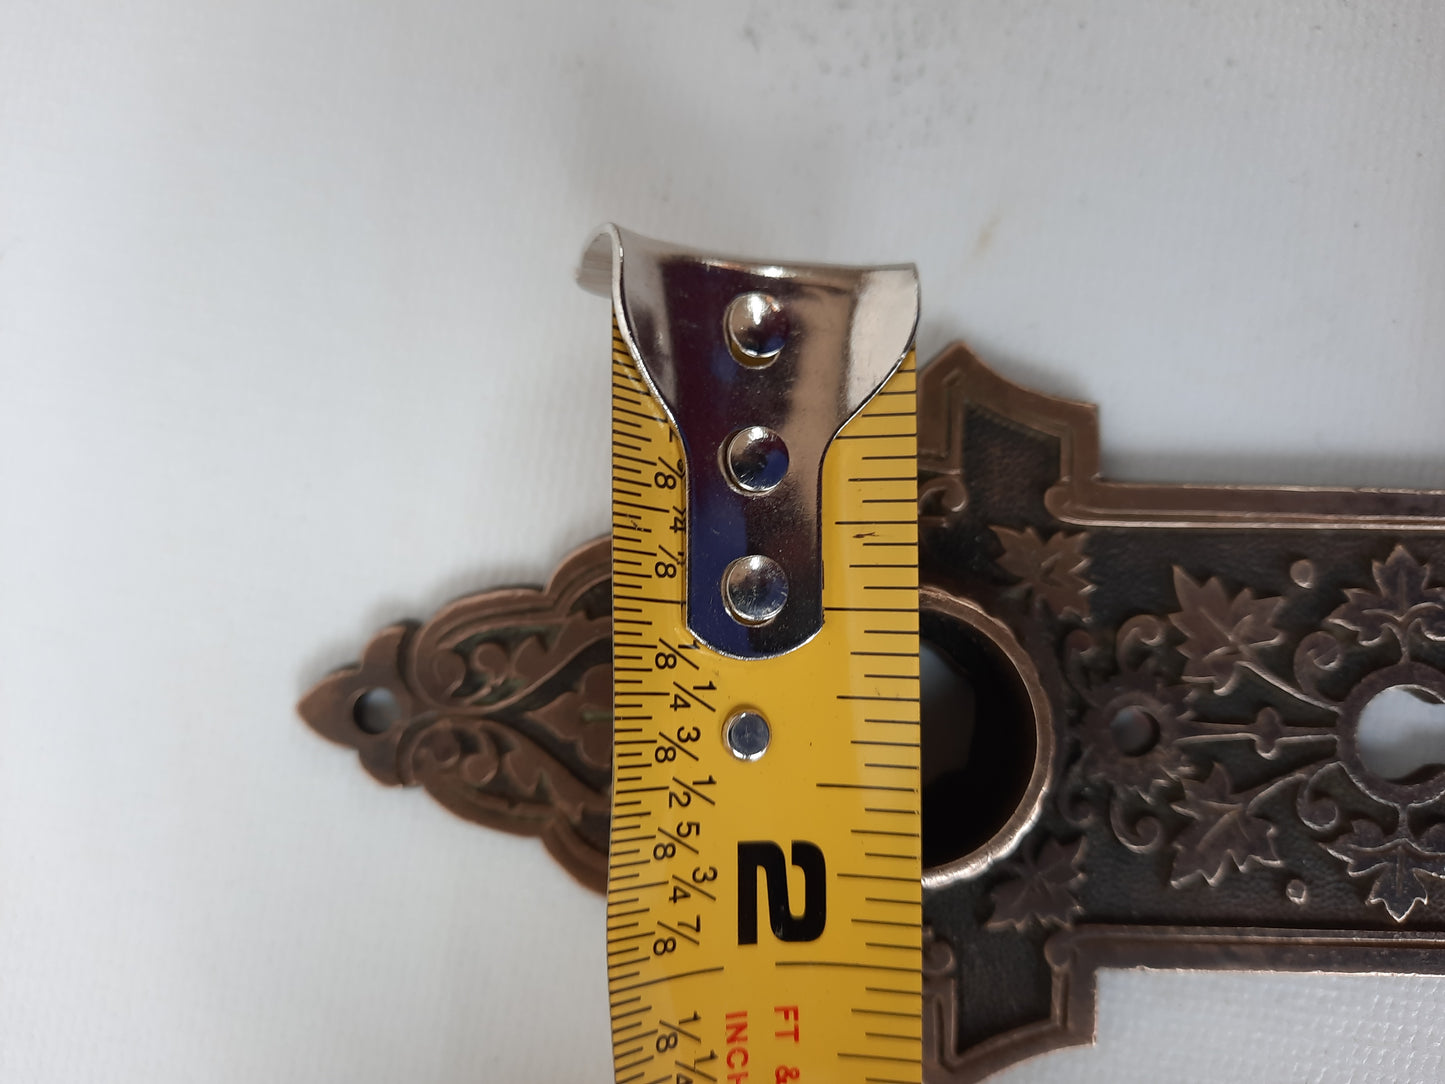 Leaf Design Exterior Door Plate, Antique Doorknob Plate Double Keyhole 013105